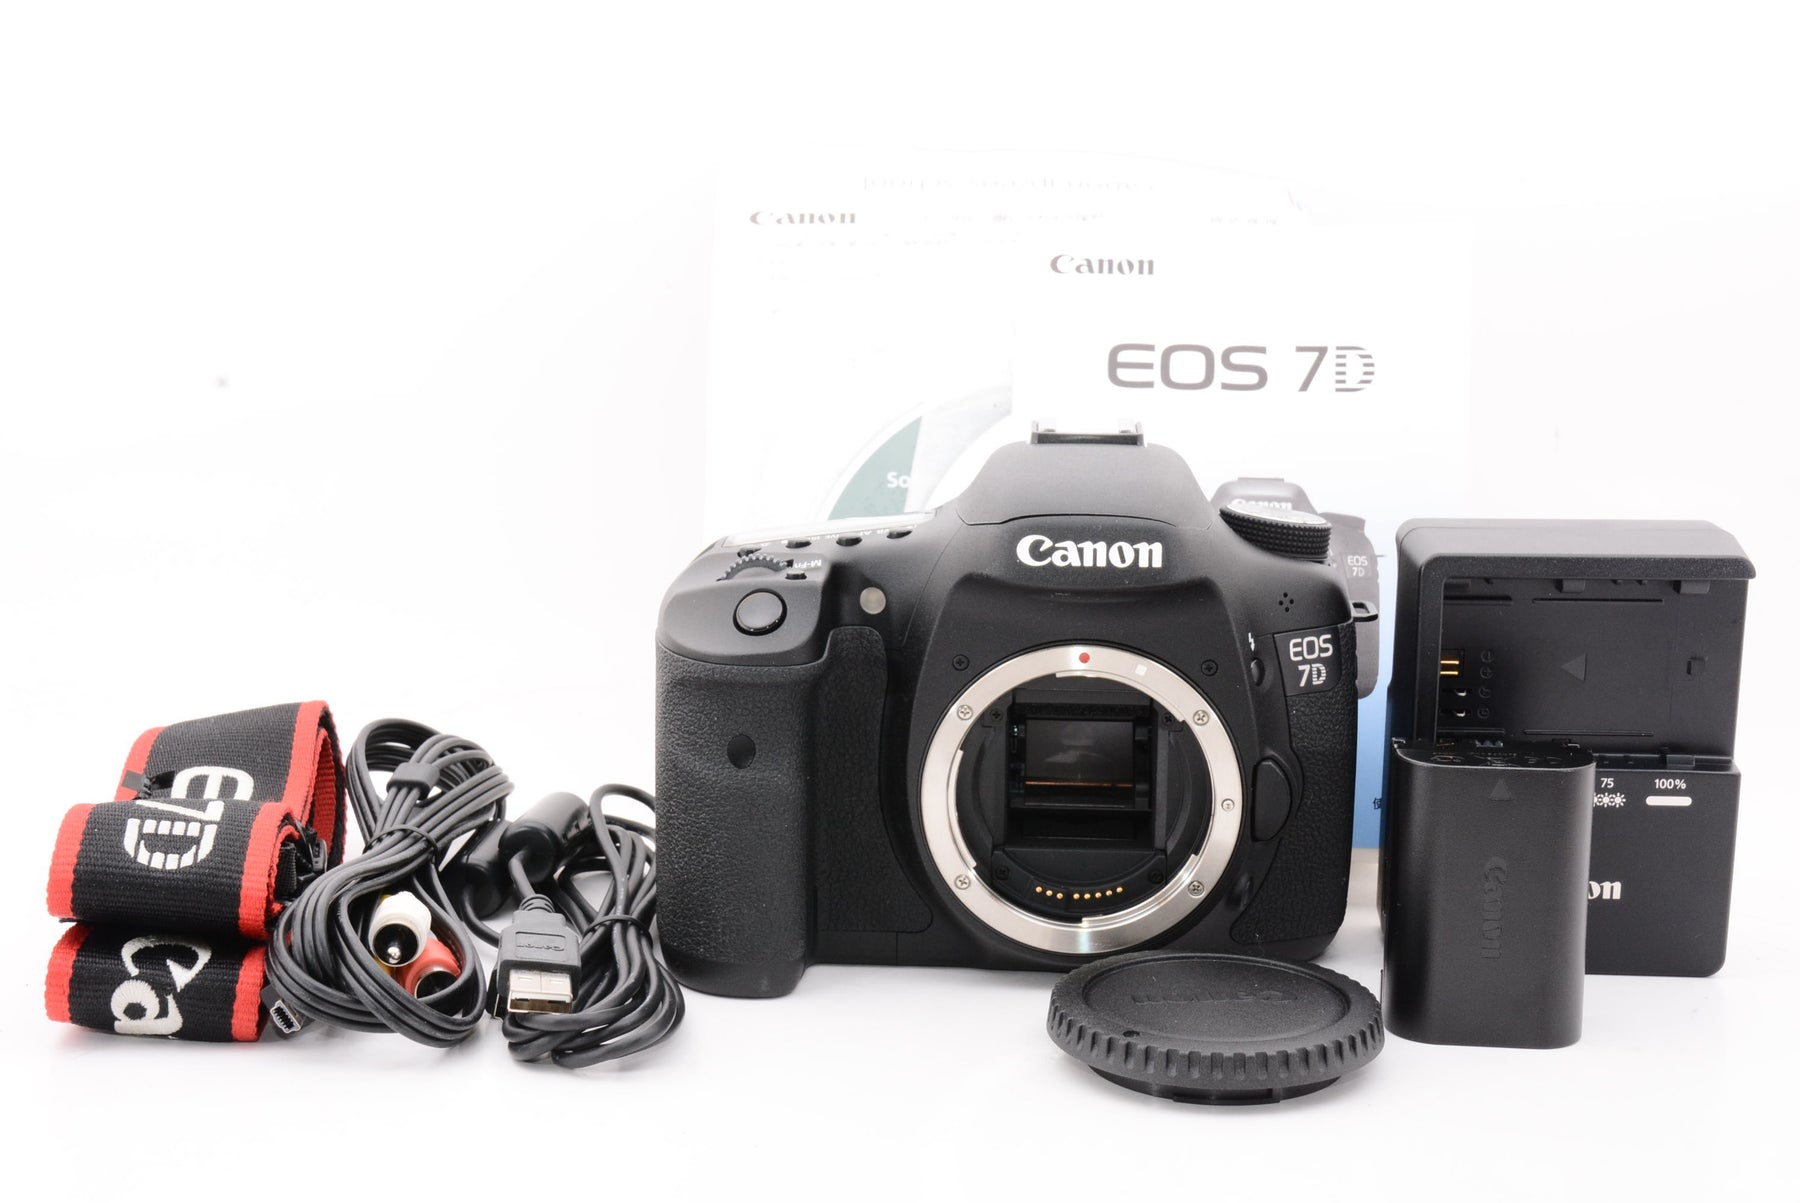 Canon デジタル一眼レフカメラ EOS 7D ボディ EOS7D - 4